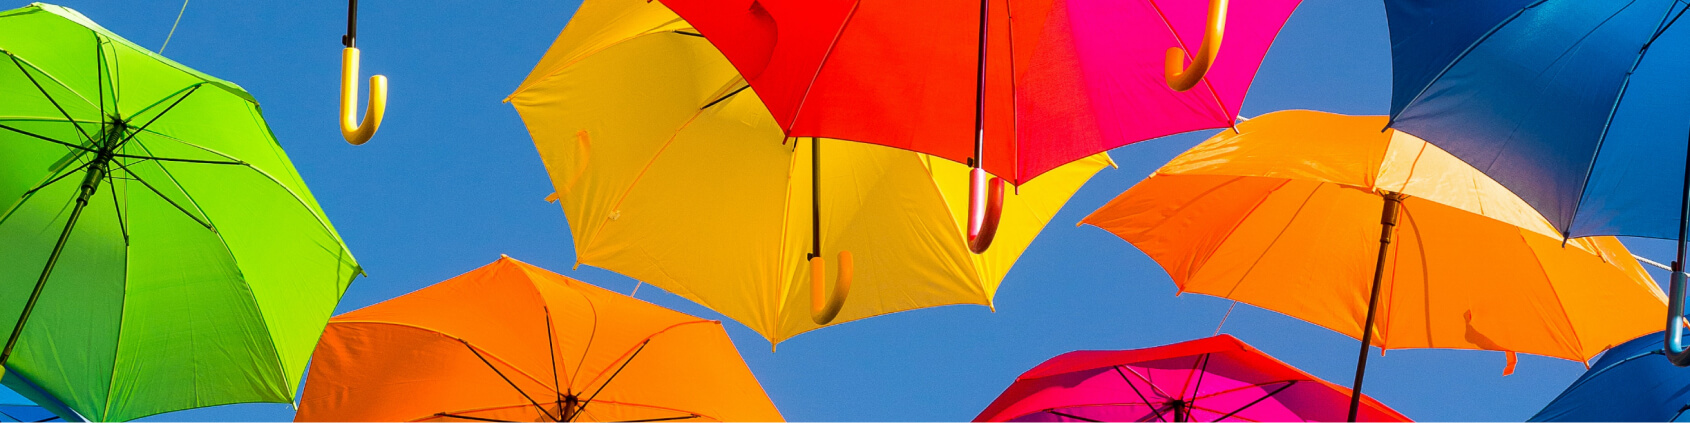 Colourful umbrellas against a blue sky